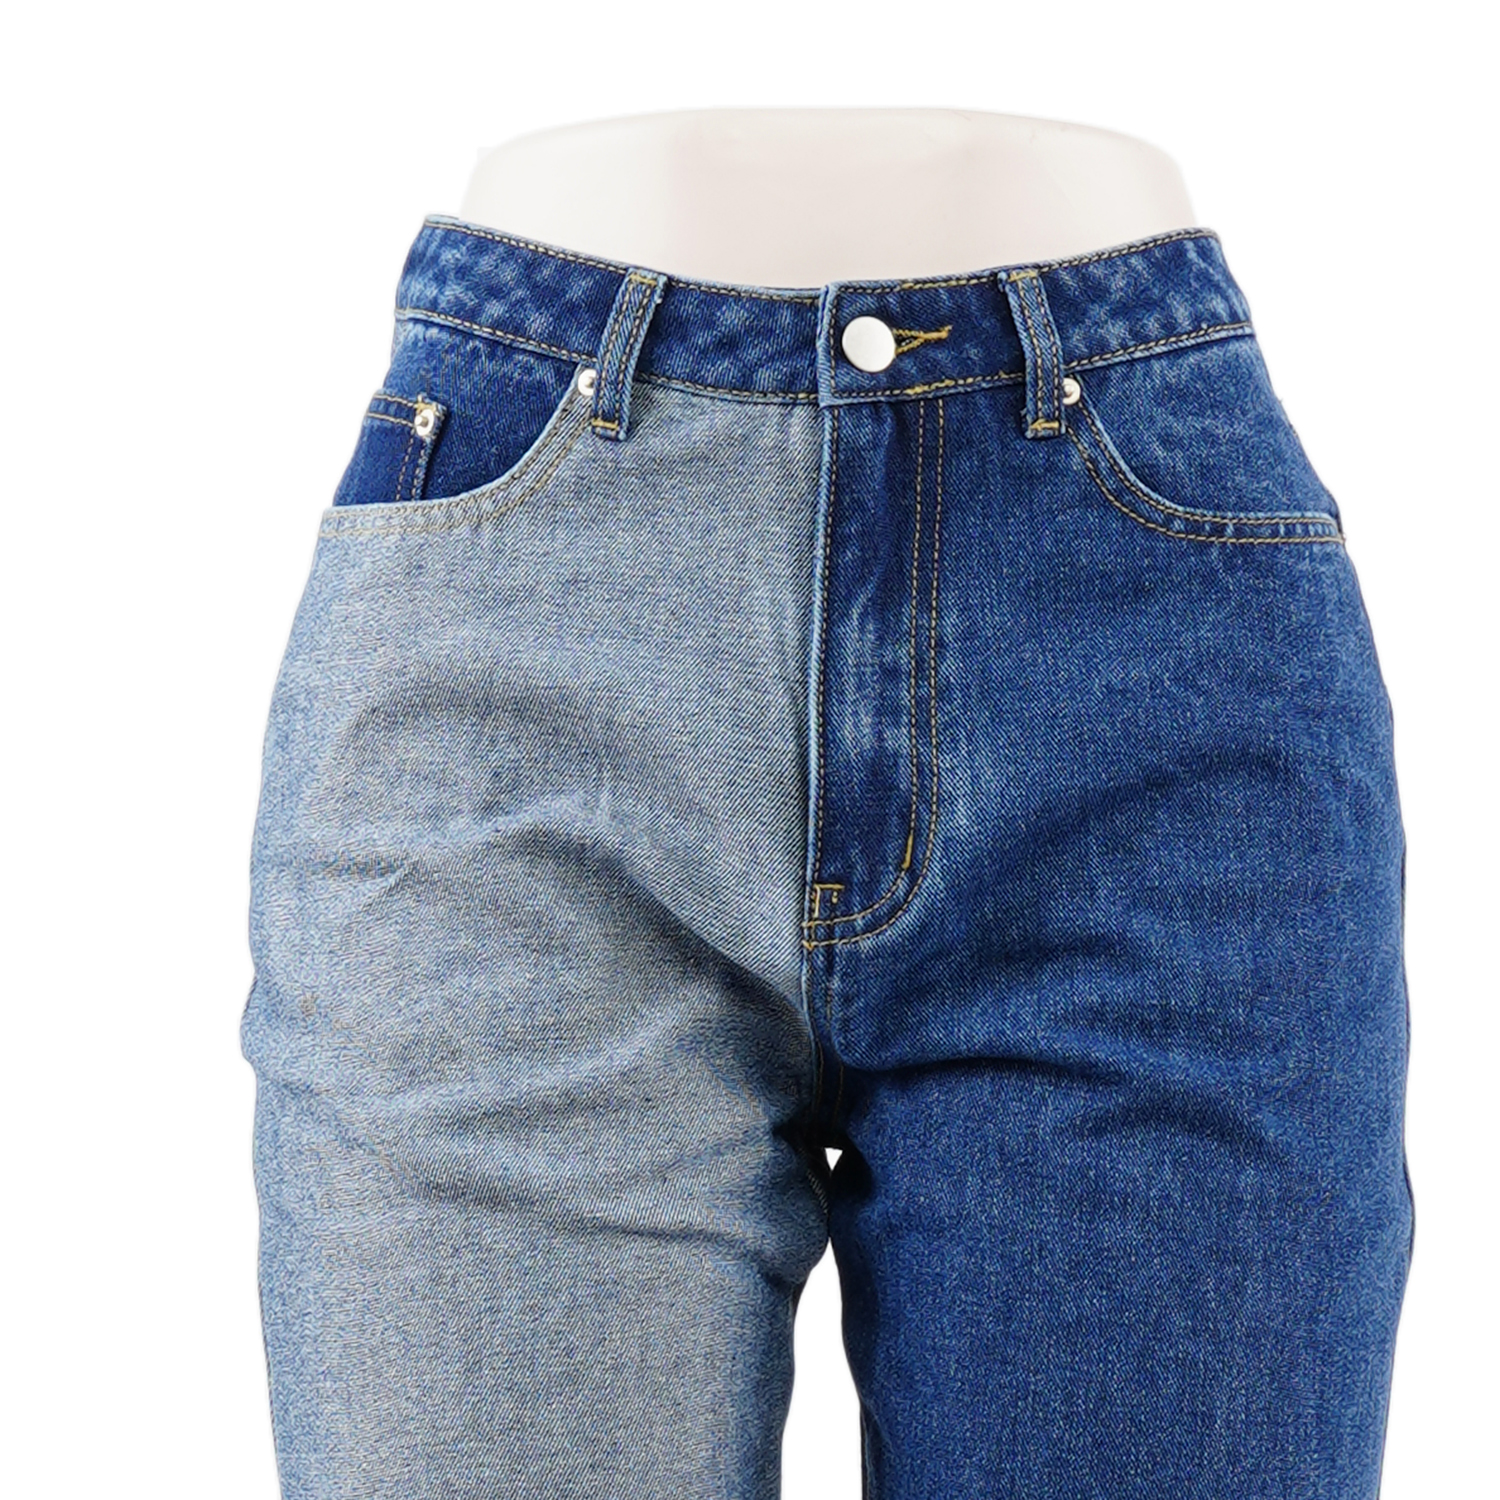 SKYKINGDOM new arrival jeans 100 cotton denim straight leg loose angle length blue jeans for women